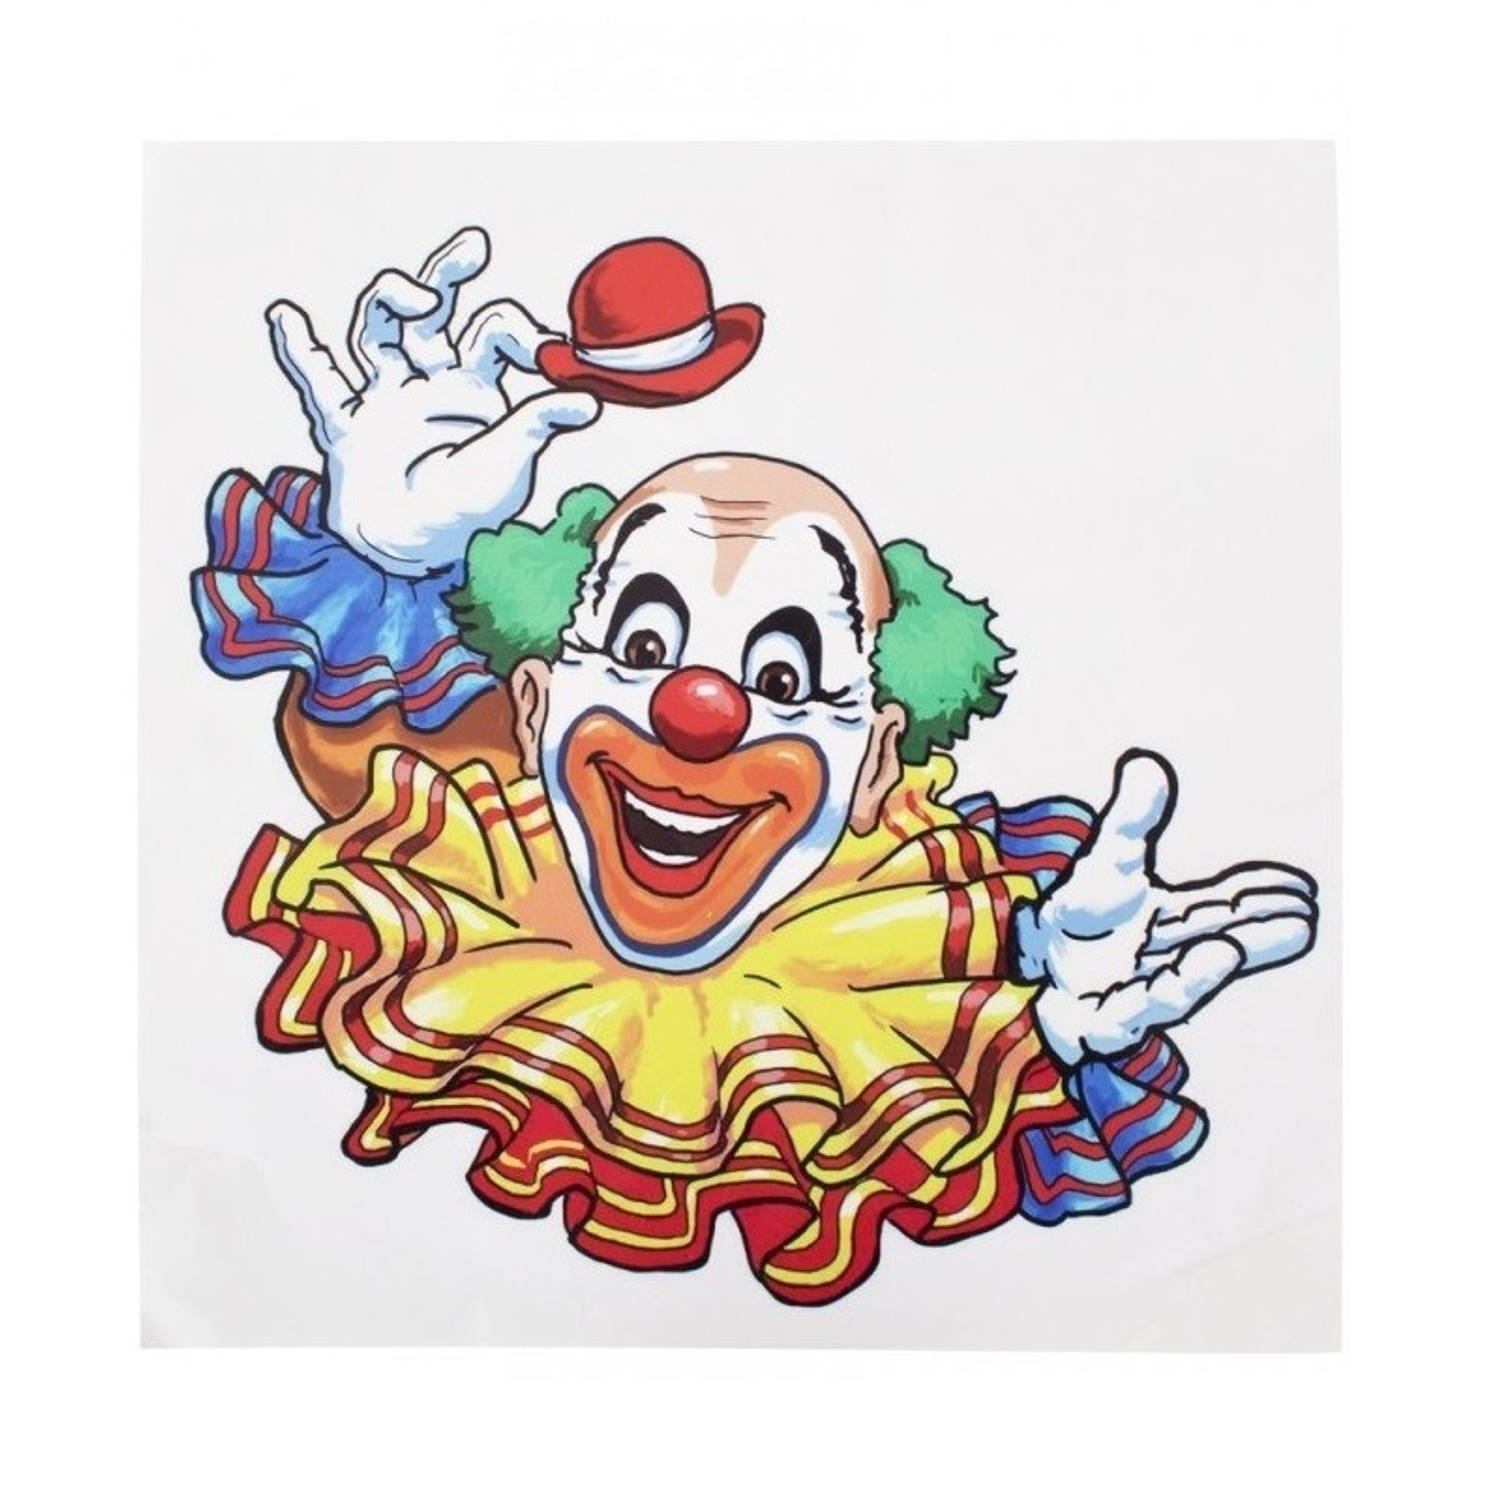 Raamsticker lachende clown 35 x 40 cm - Raamstickers